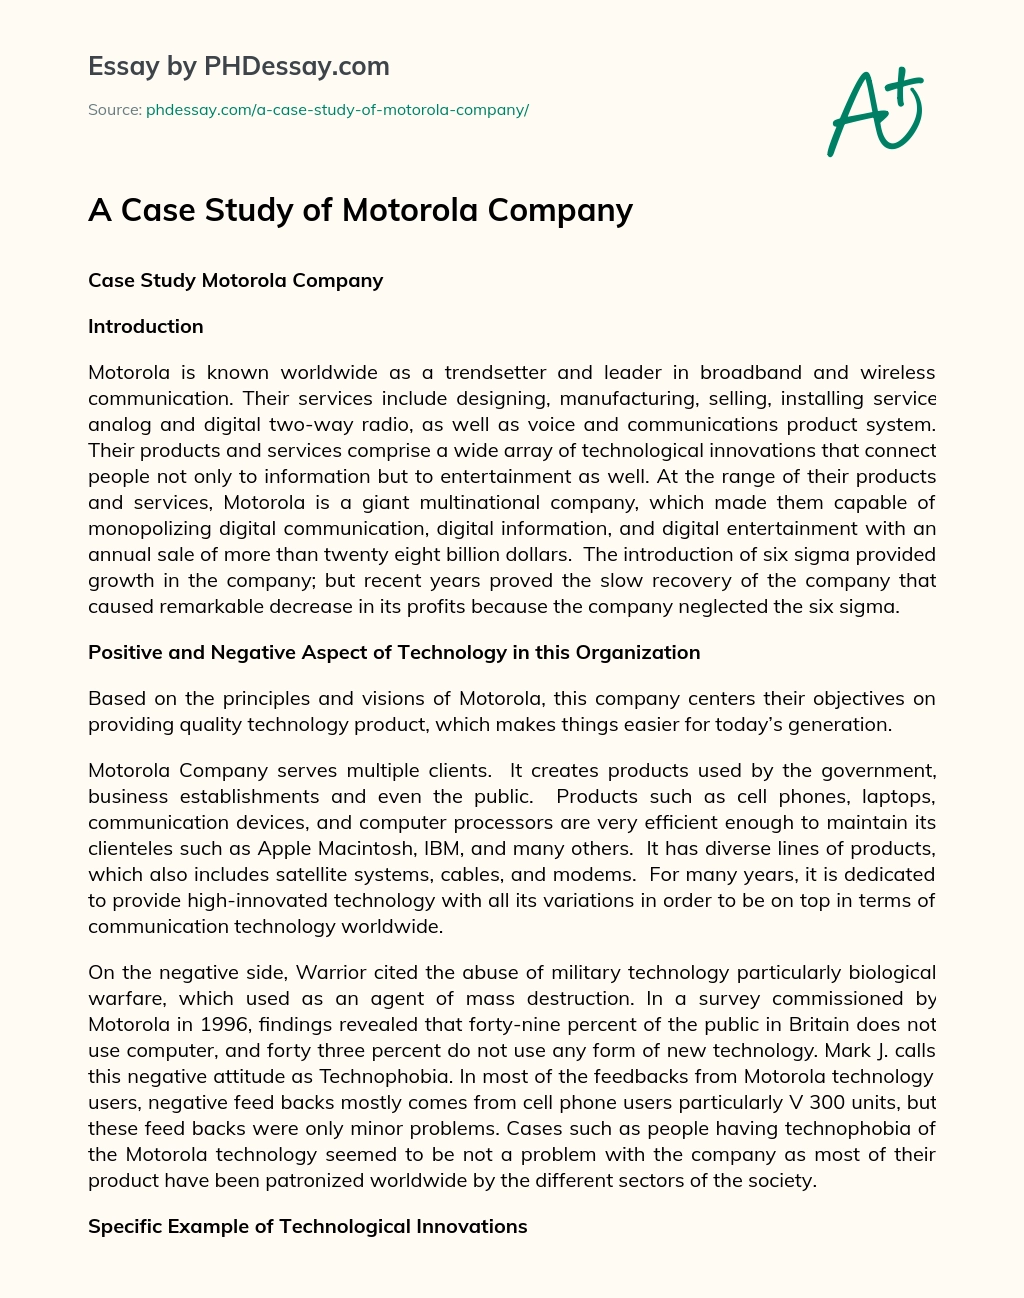 a case study of motorola company